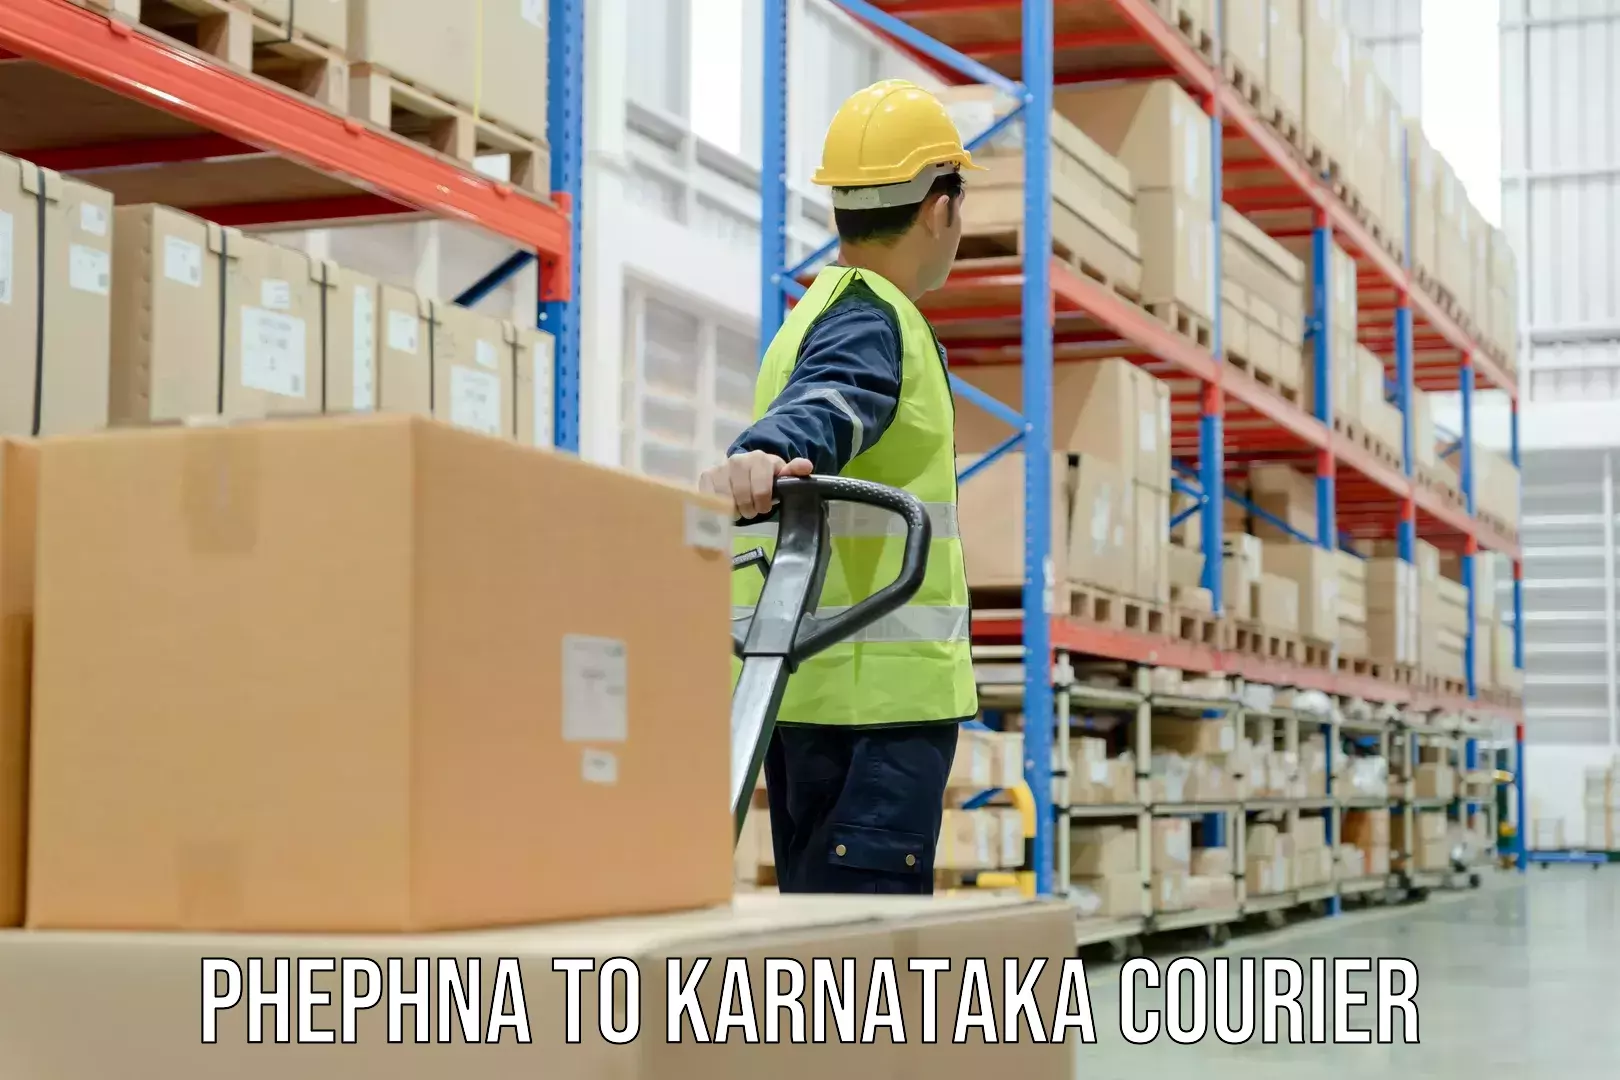 Lightweight parcel options Phephna to Karnataka